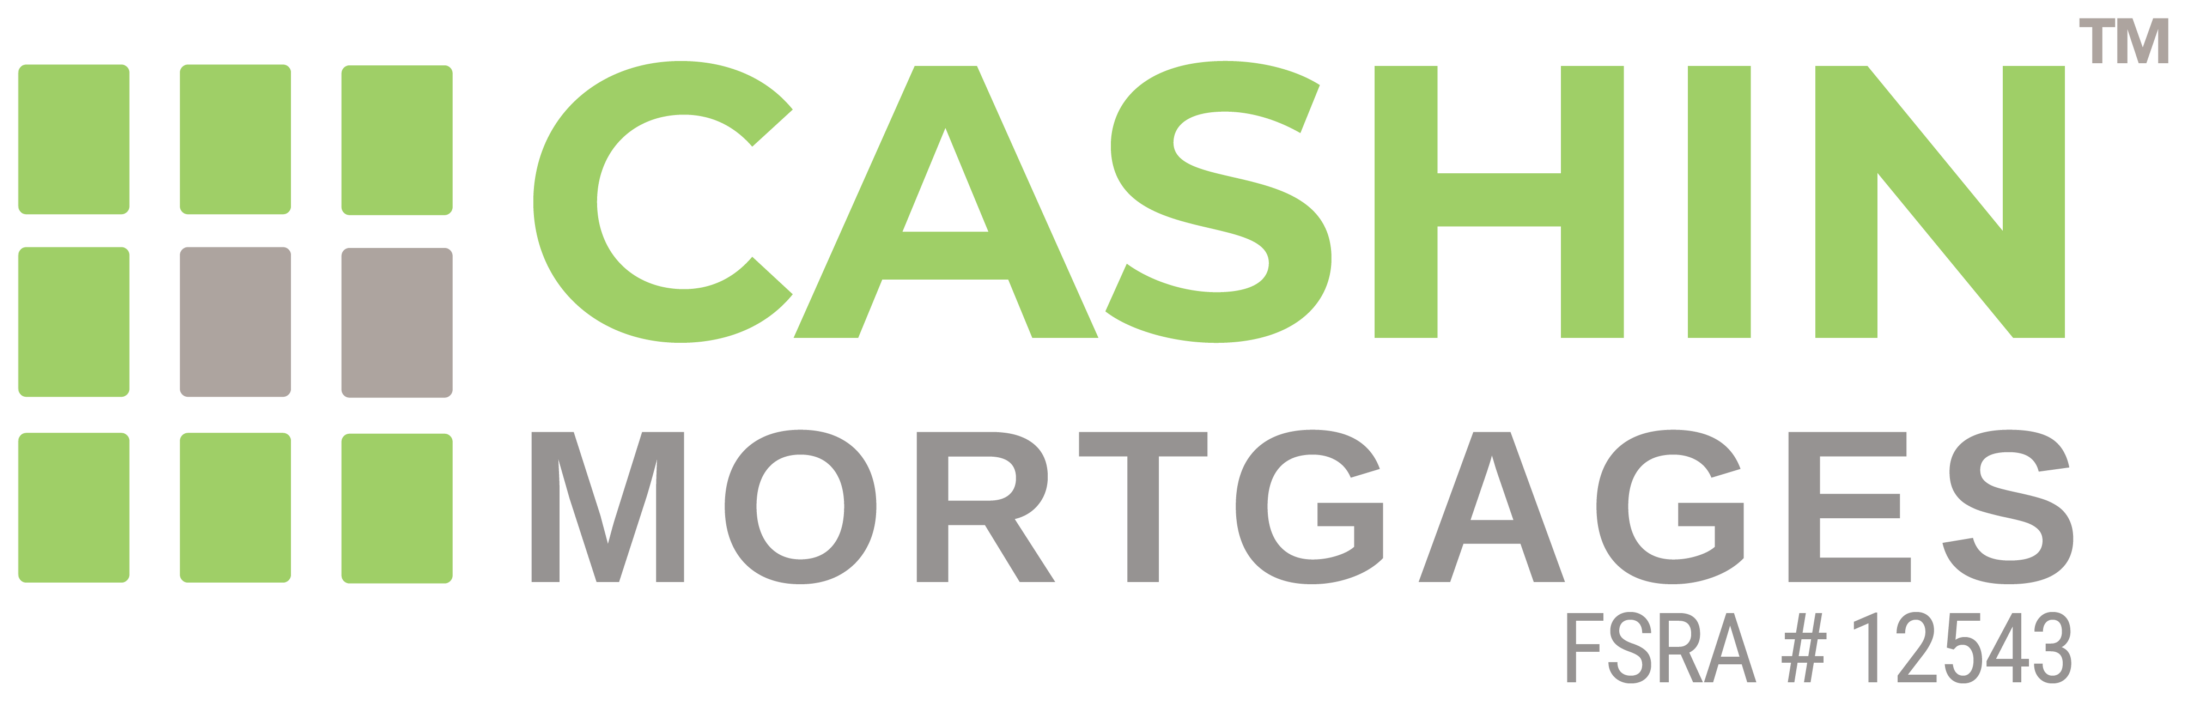 cashin mortgages logo